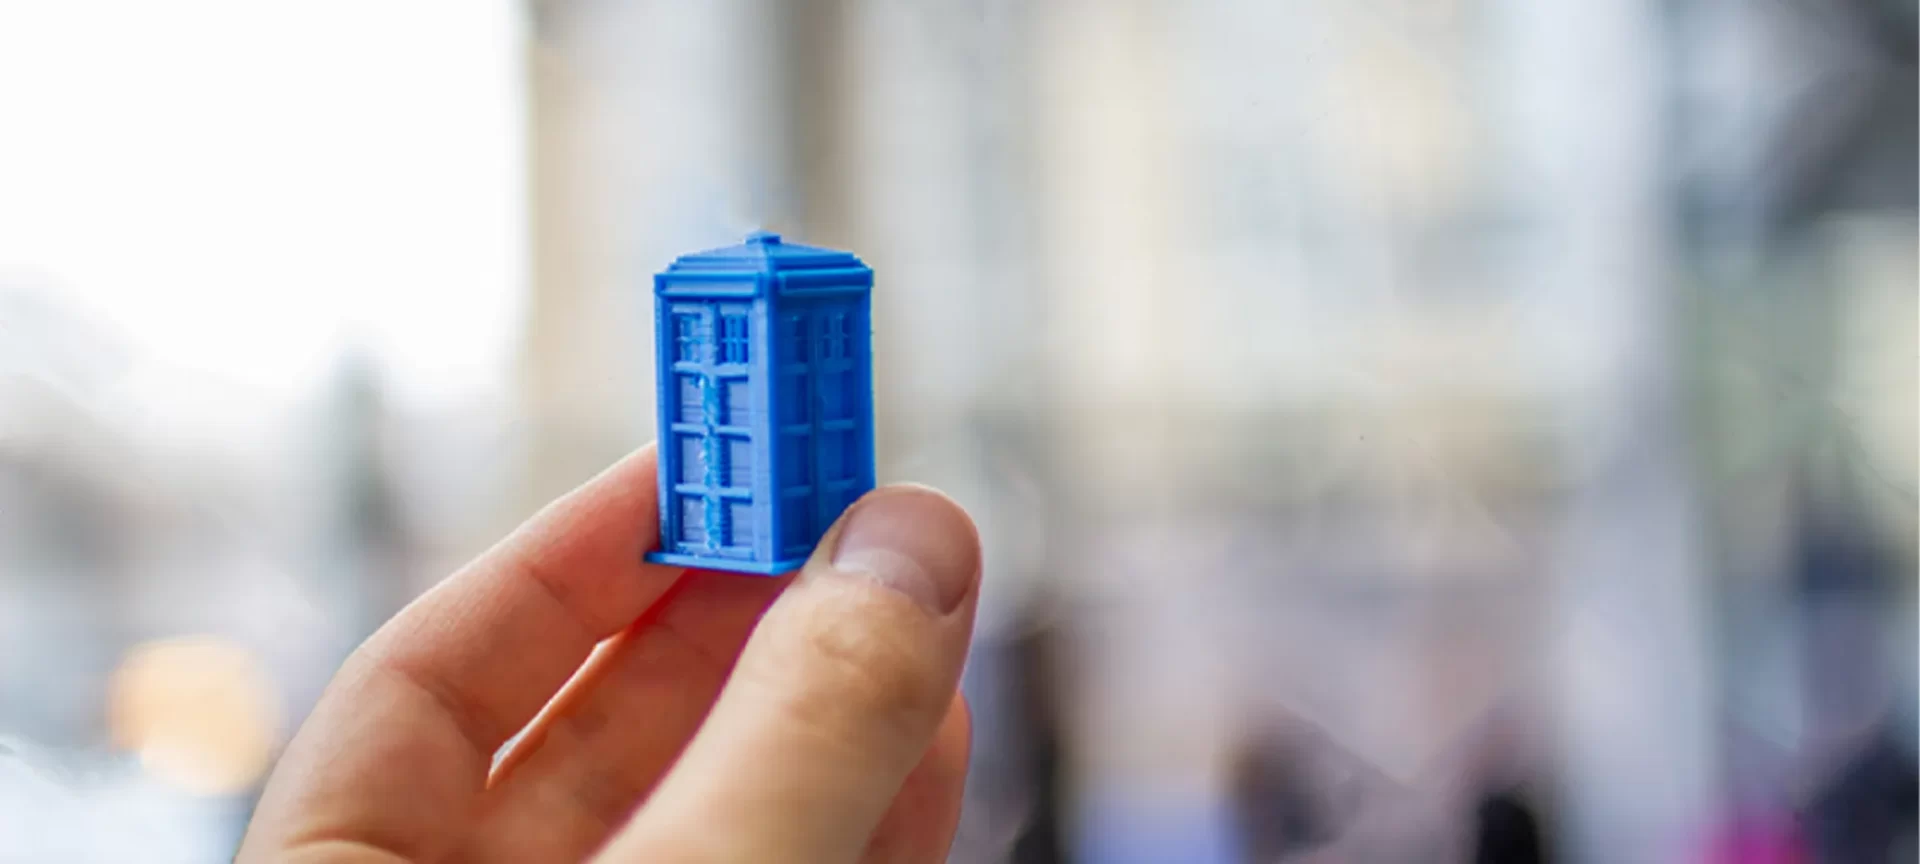 3D printed phone cabin miniature